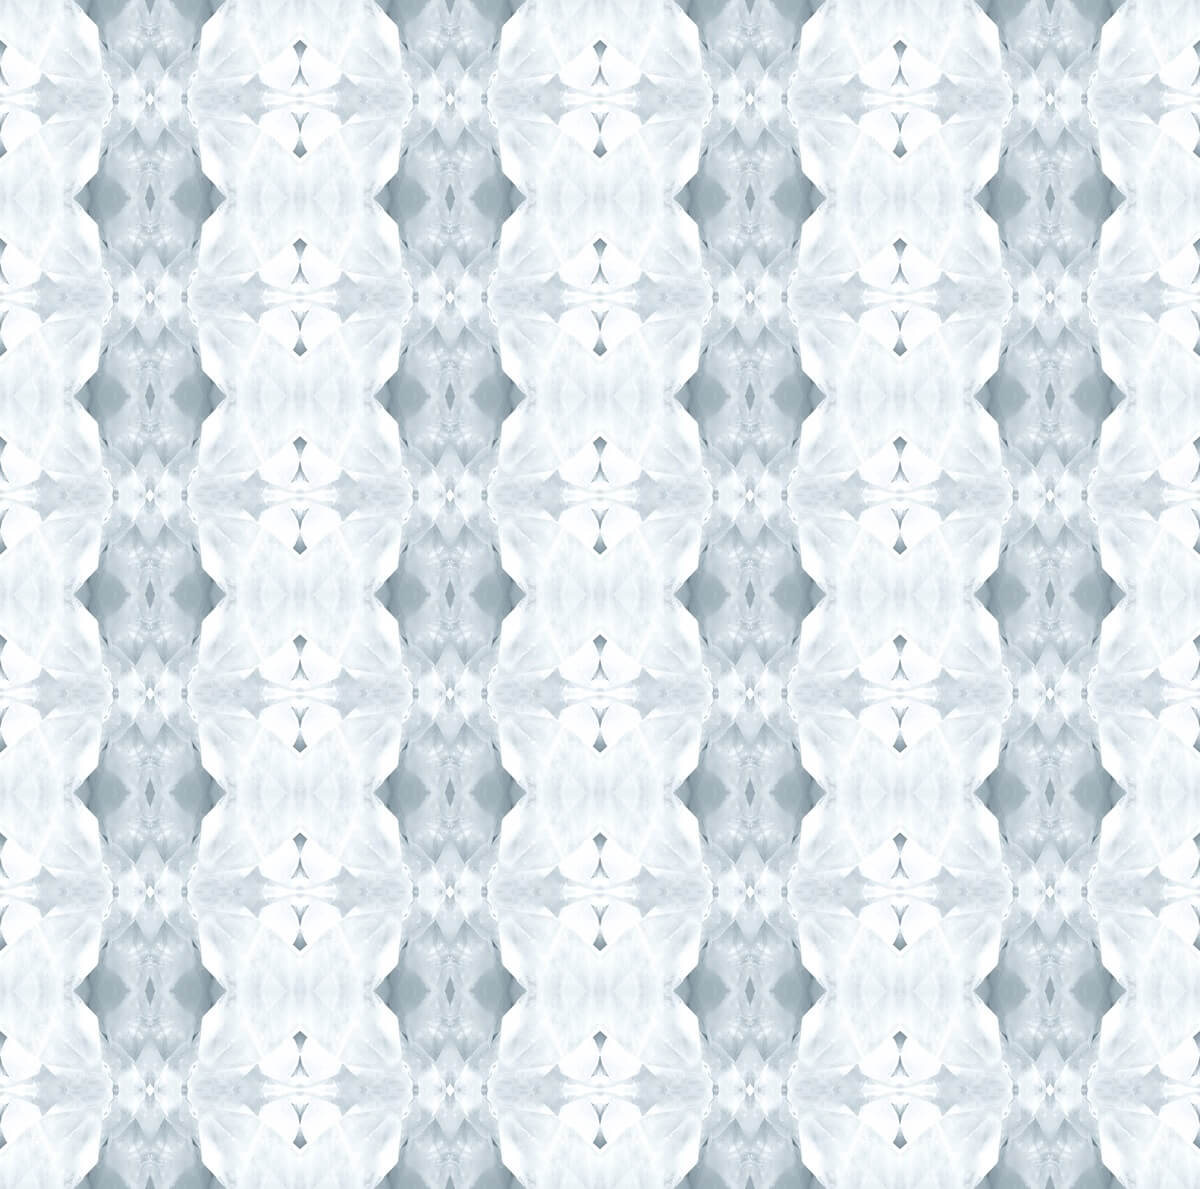 Ghost Quartz pattern in frost white